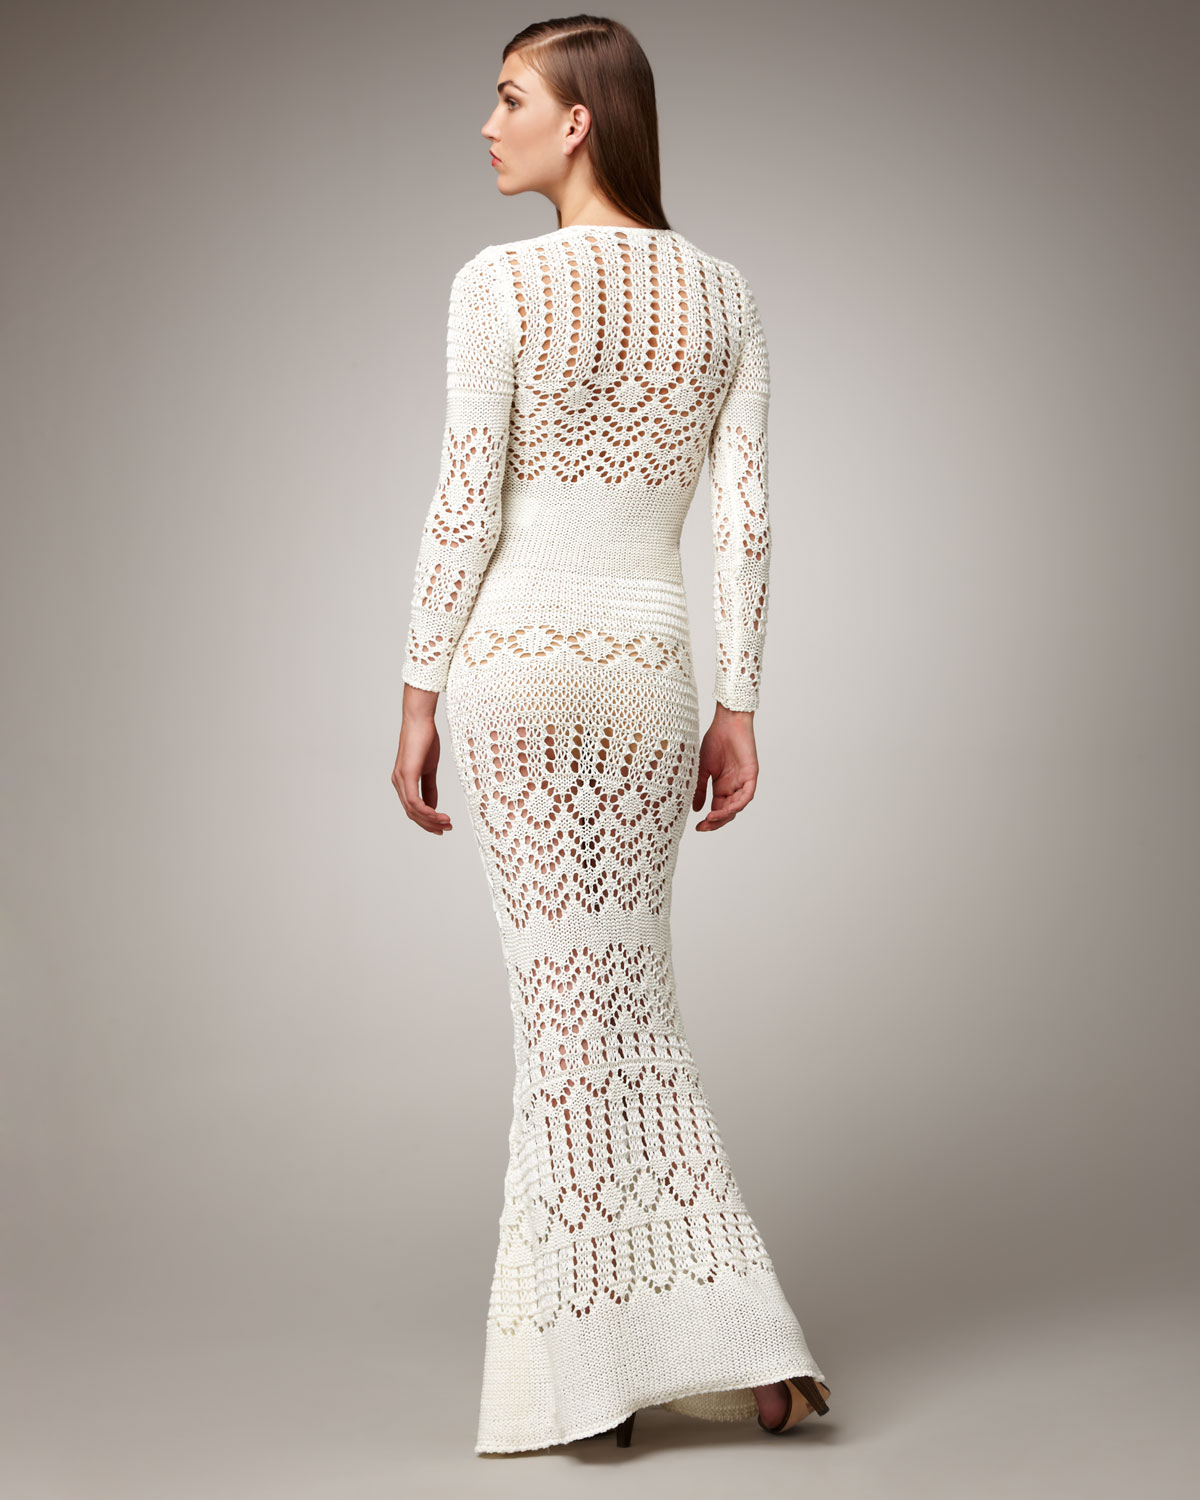 Lyst - Emilio Pucci Crocheted Maxi Dress in White